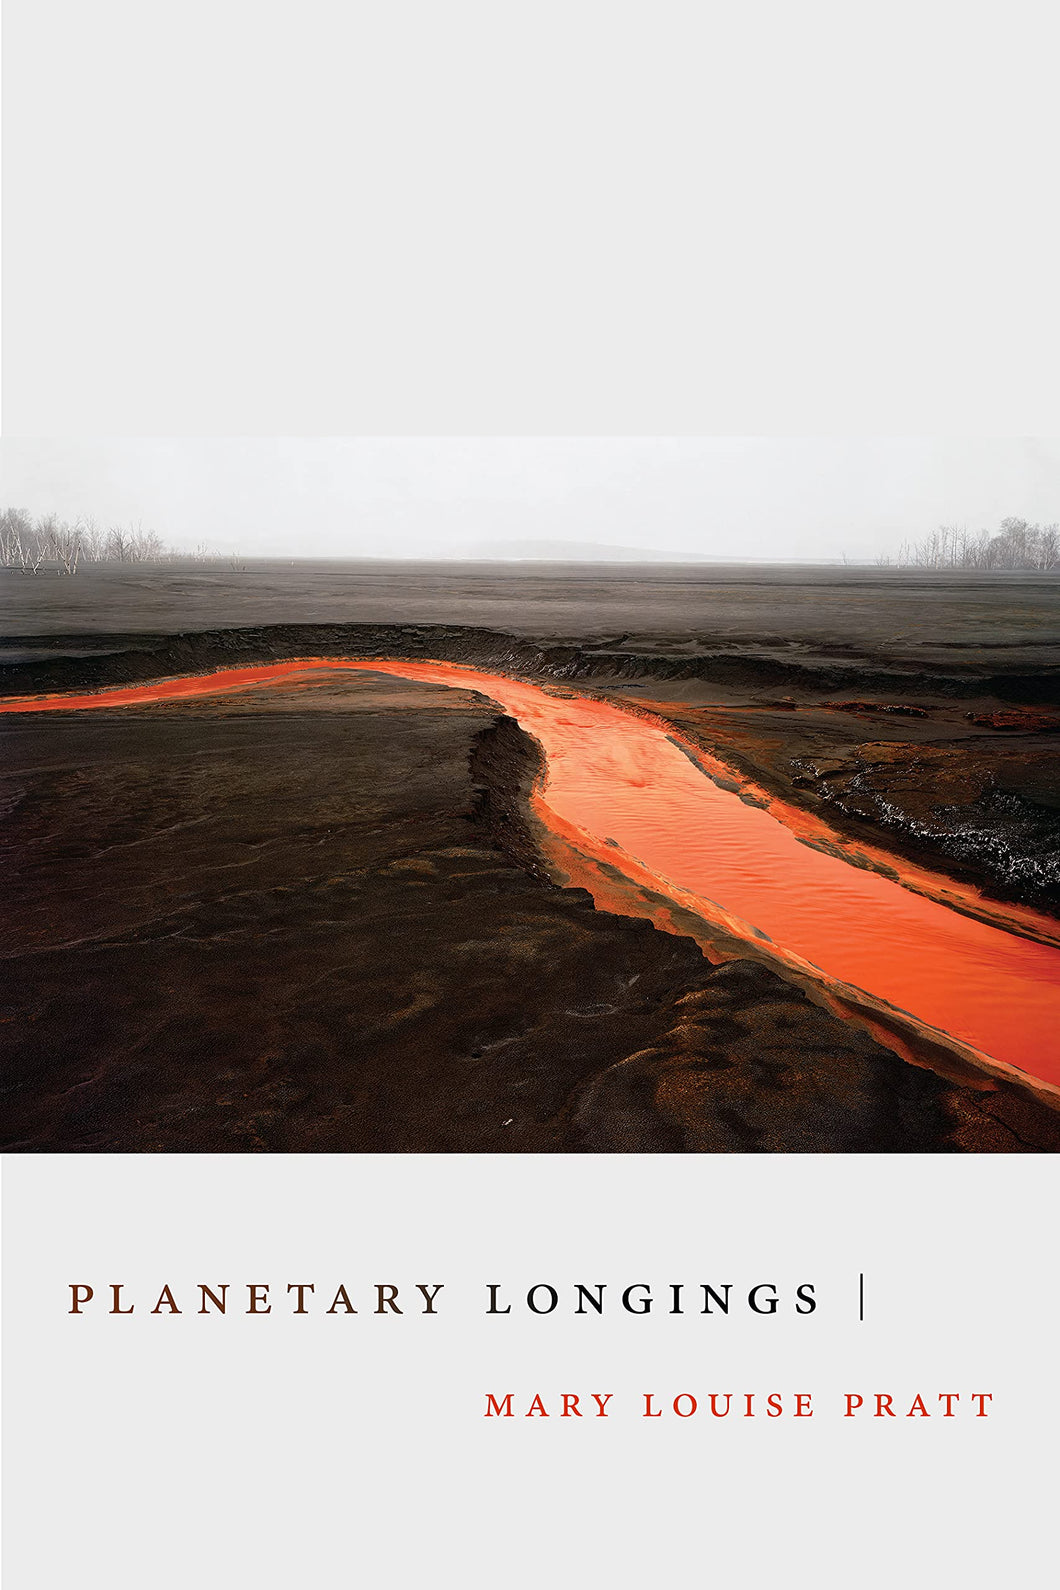 Planetary Longings by Mary Louise Pratt